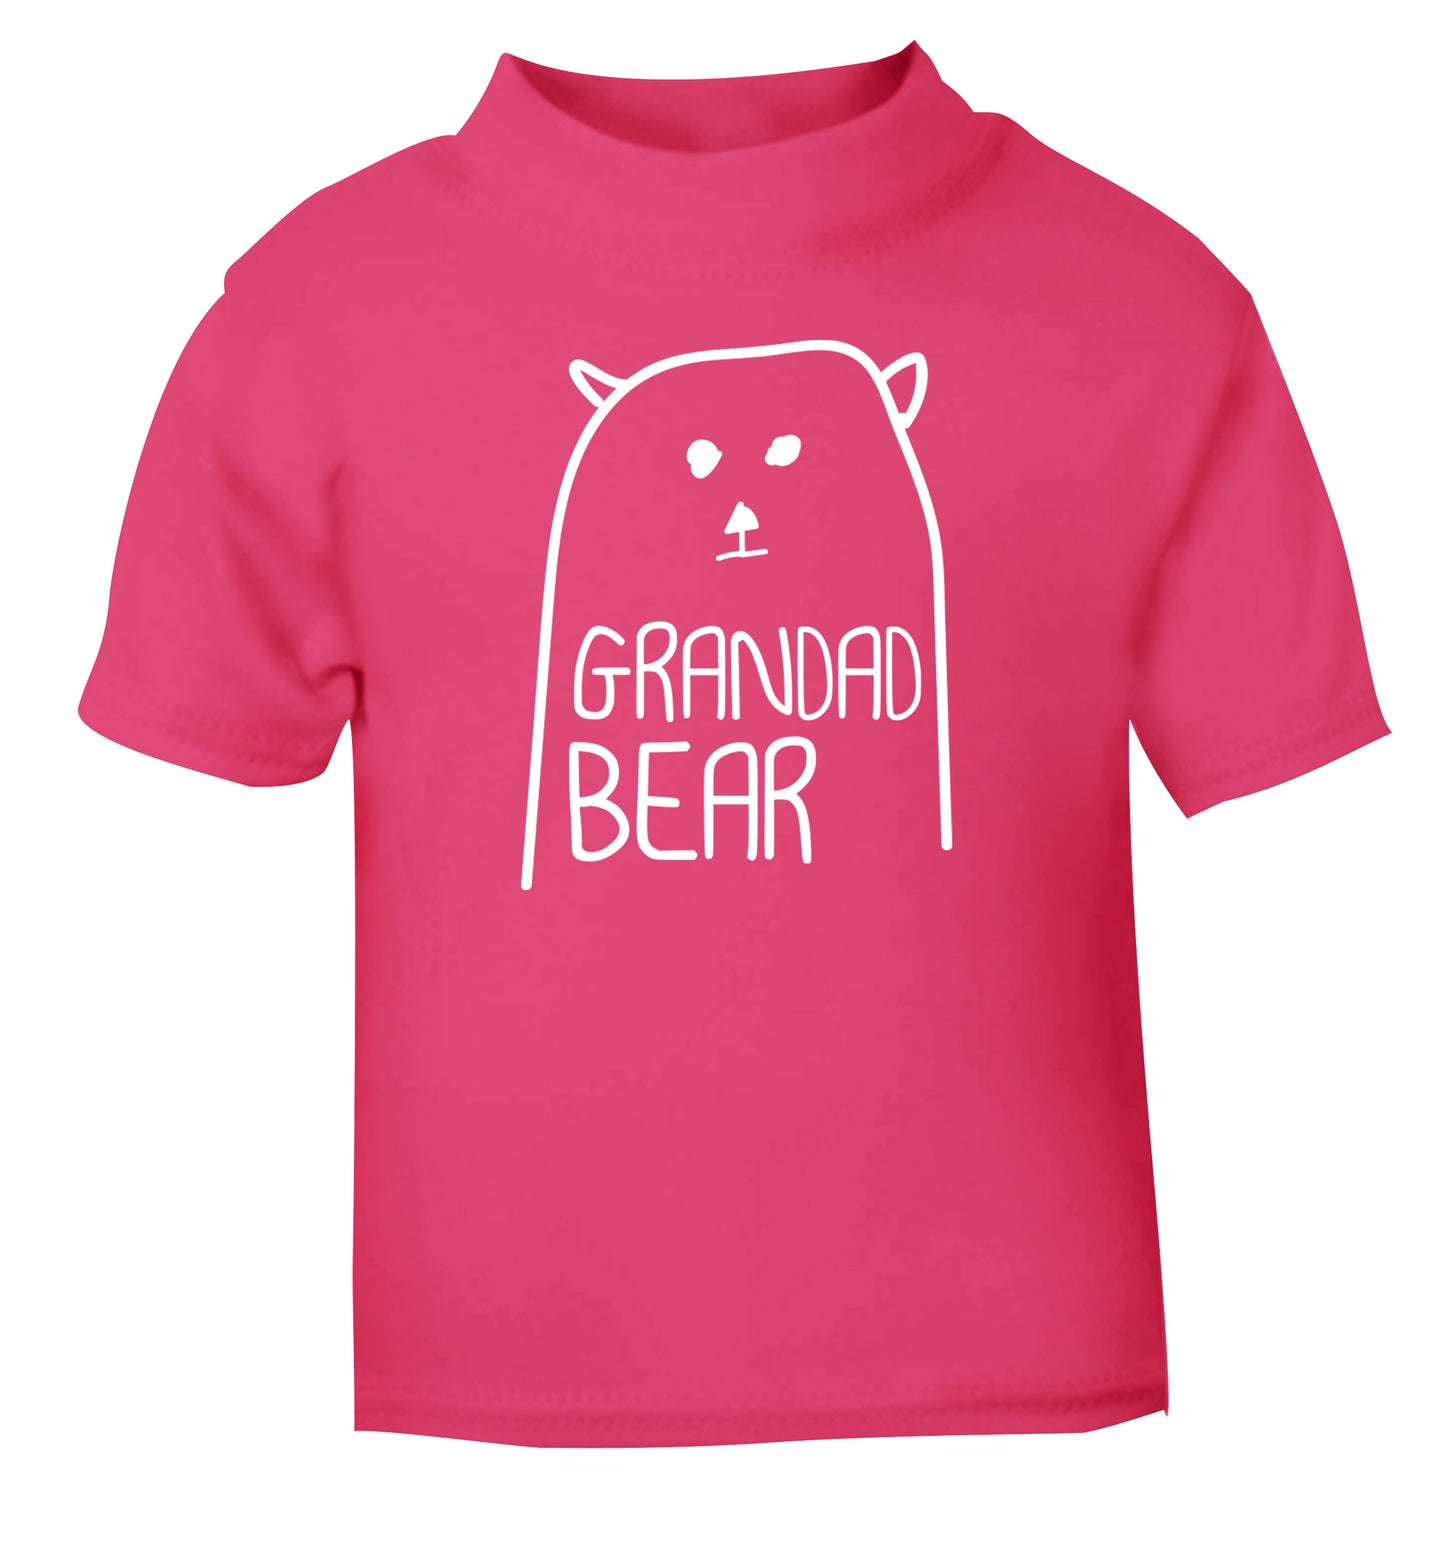 Grandad bear pink Baby Toddler Tshirt 2 Years